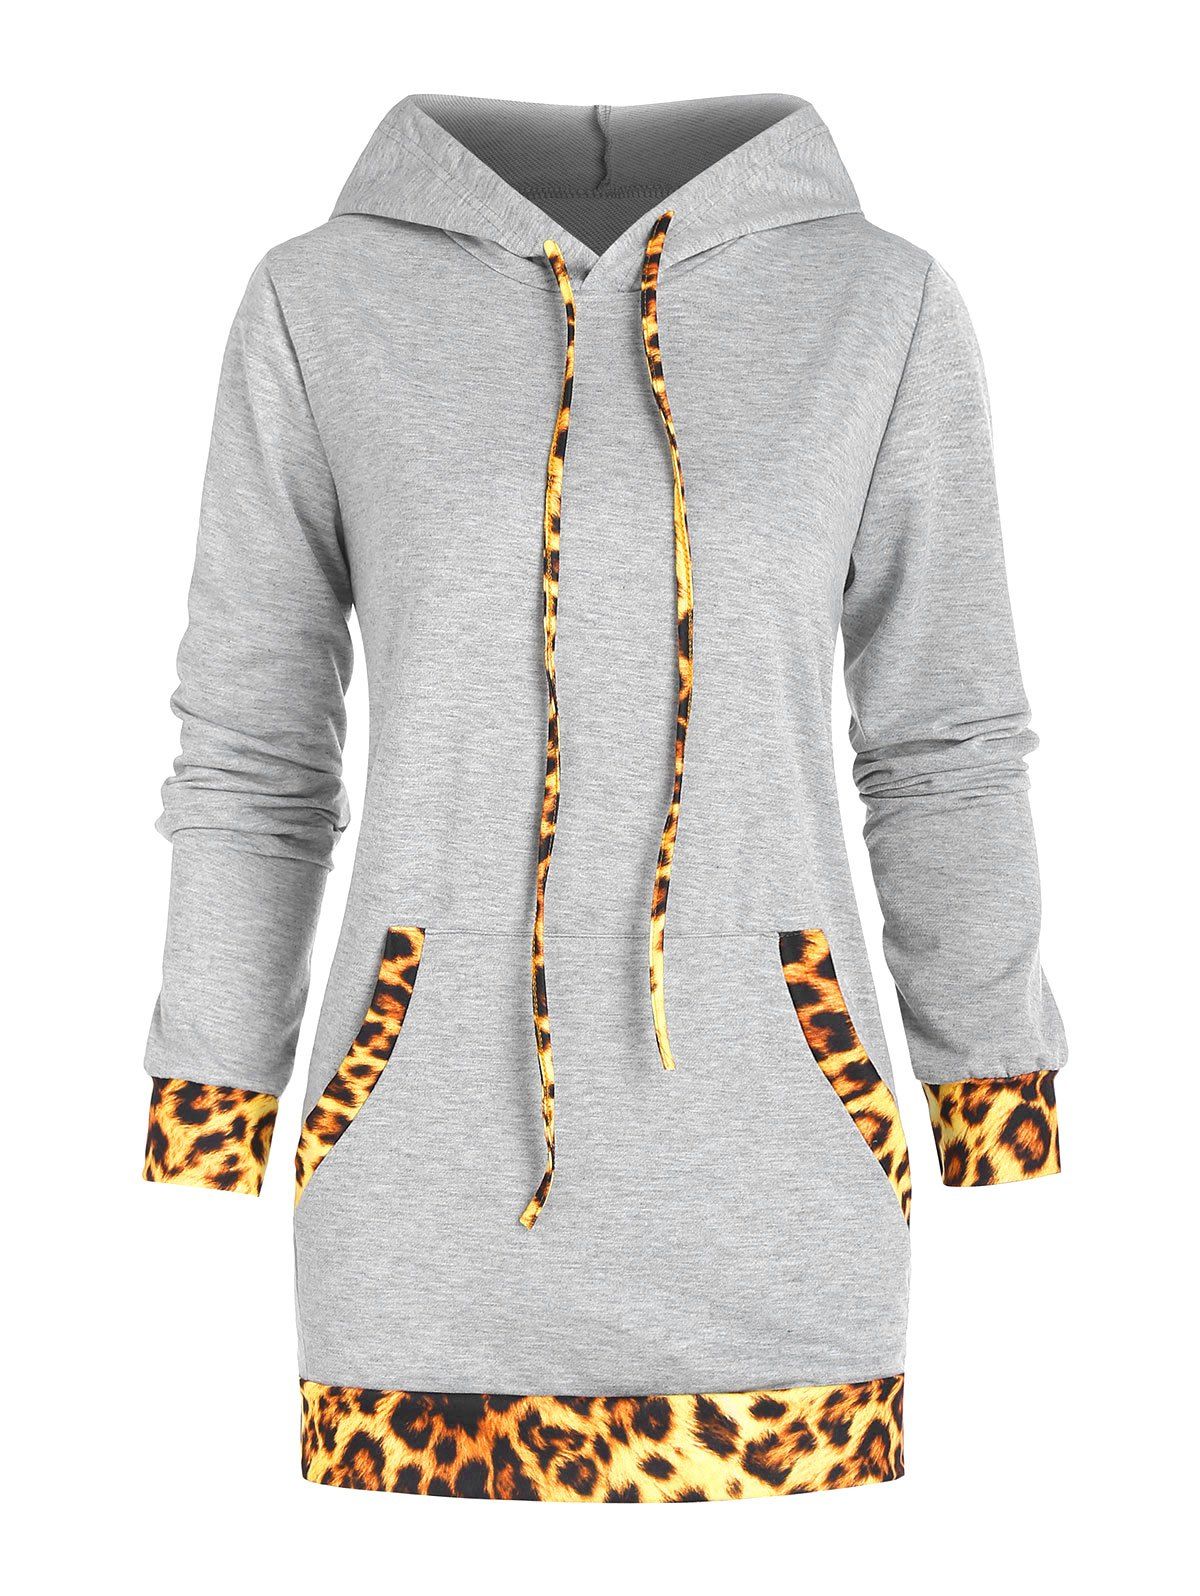 Leopard Kangaroo Pocket Hoodie Dress - LIGHT GRAY M